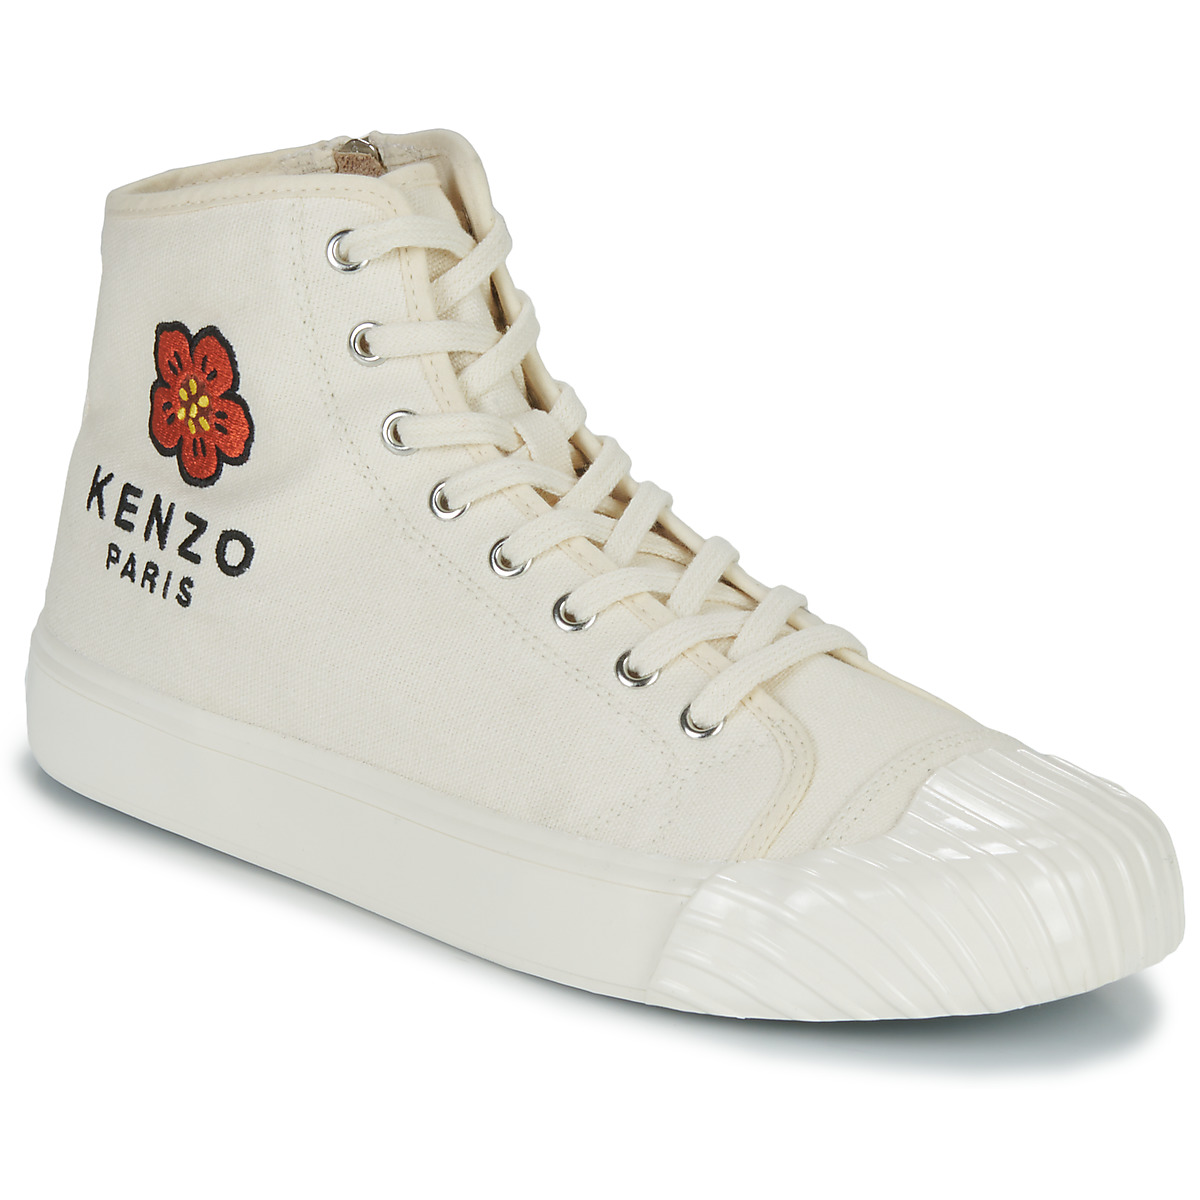 Kenzo Kenzoschool High Top Sneakers White